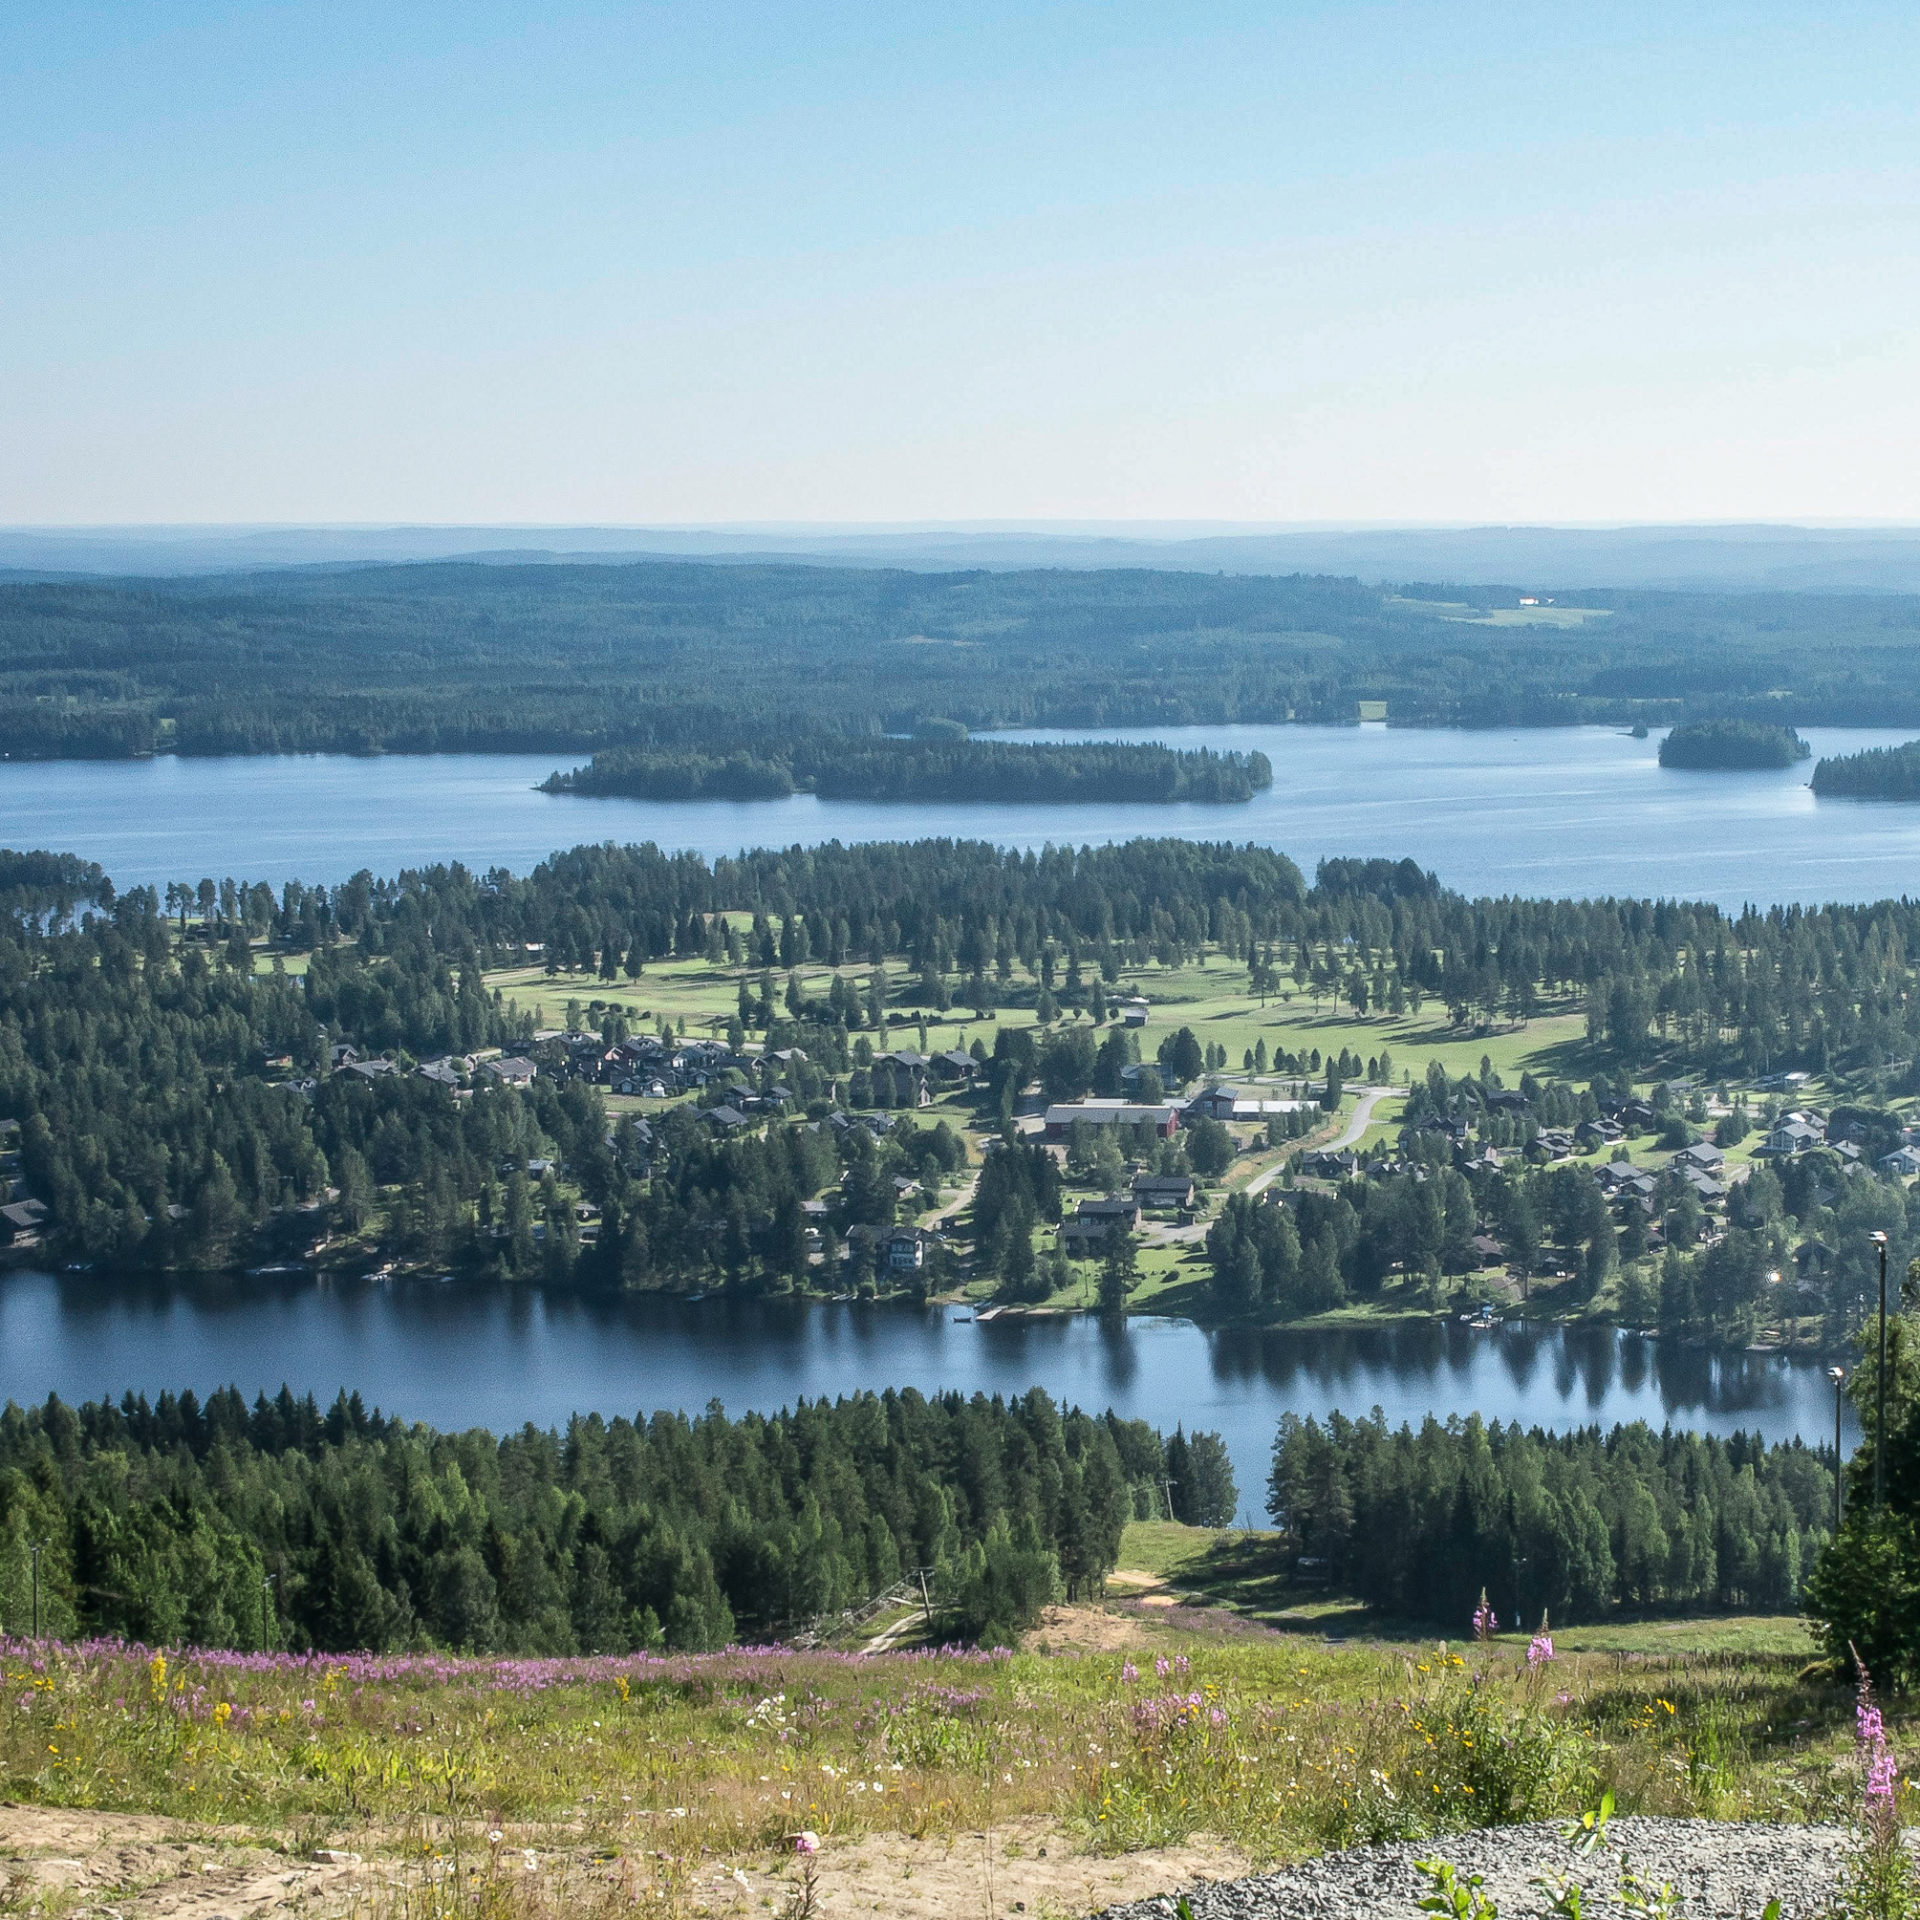 Tahko activities / hiking in Tahkovuori. Tahko / patikkaretki tahkovuorella, Villi Pohjola / Wild Nordic Finland @wildnordicfinland